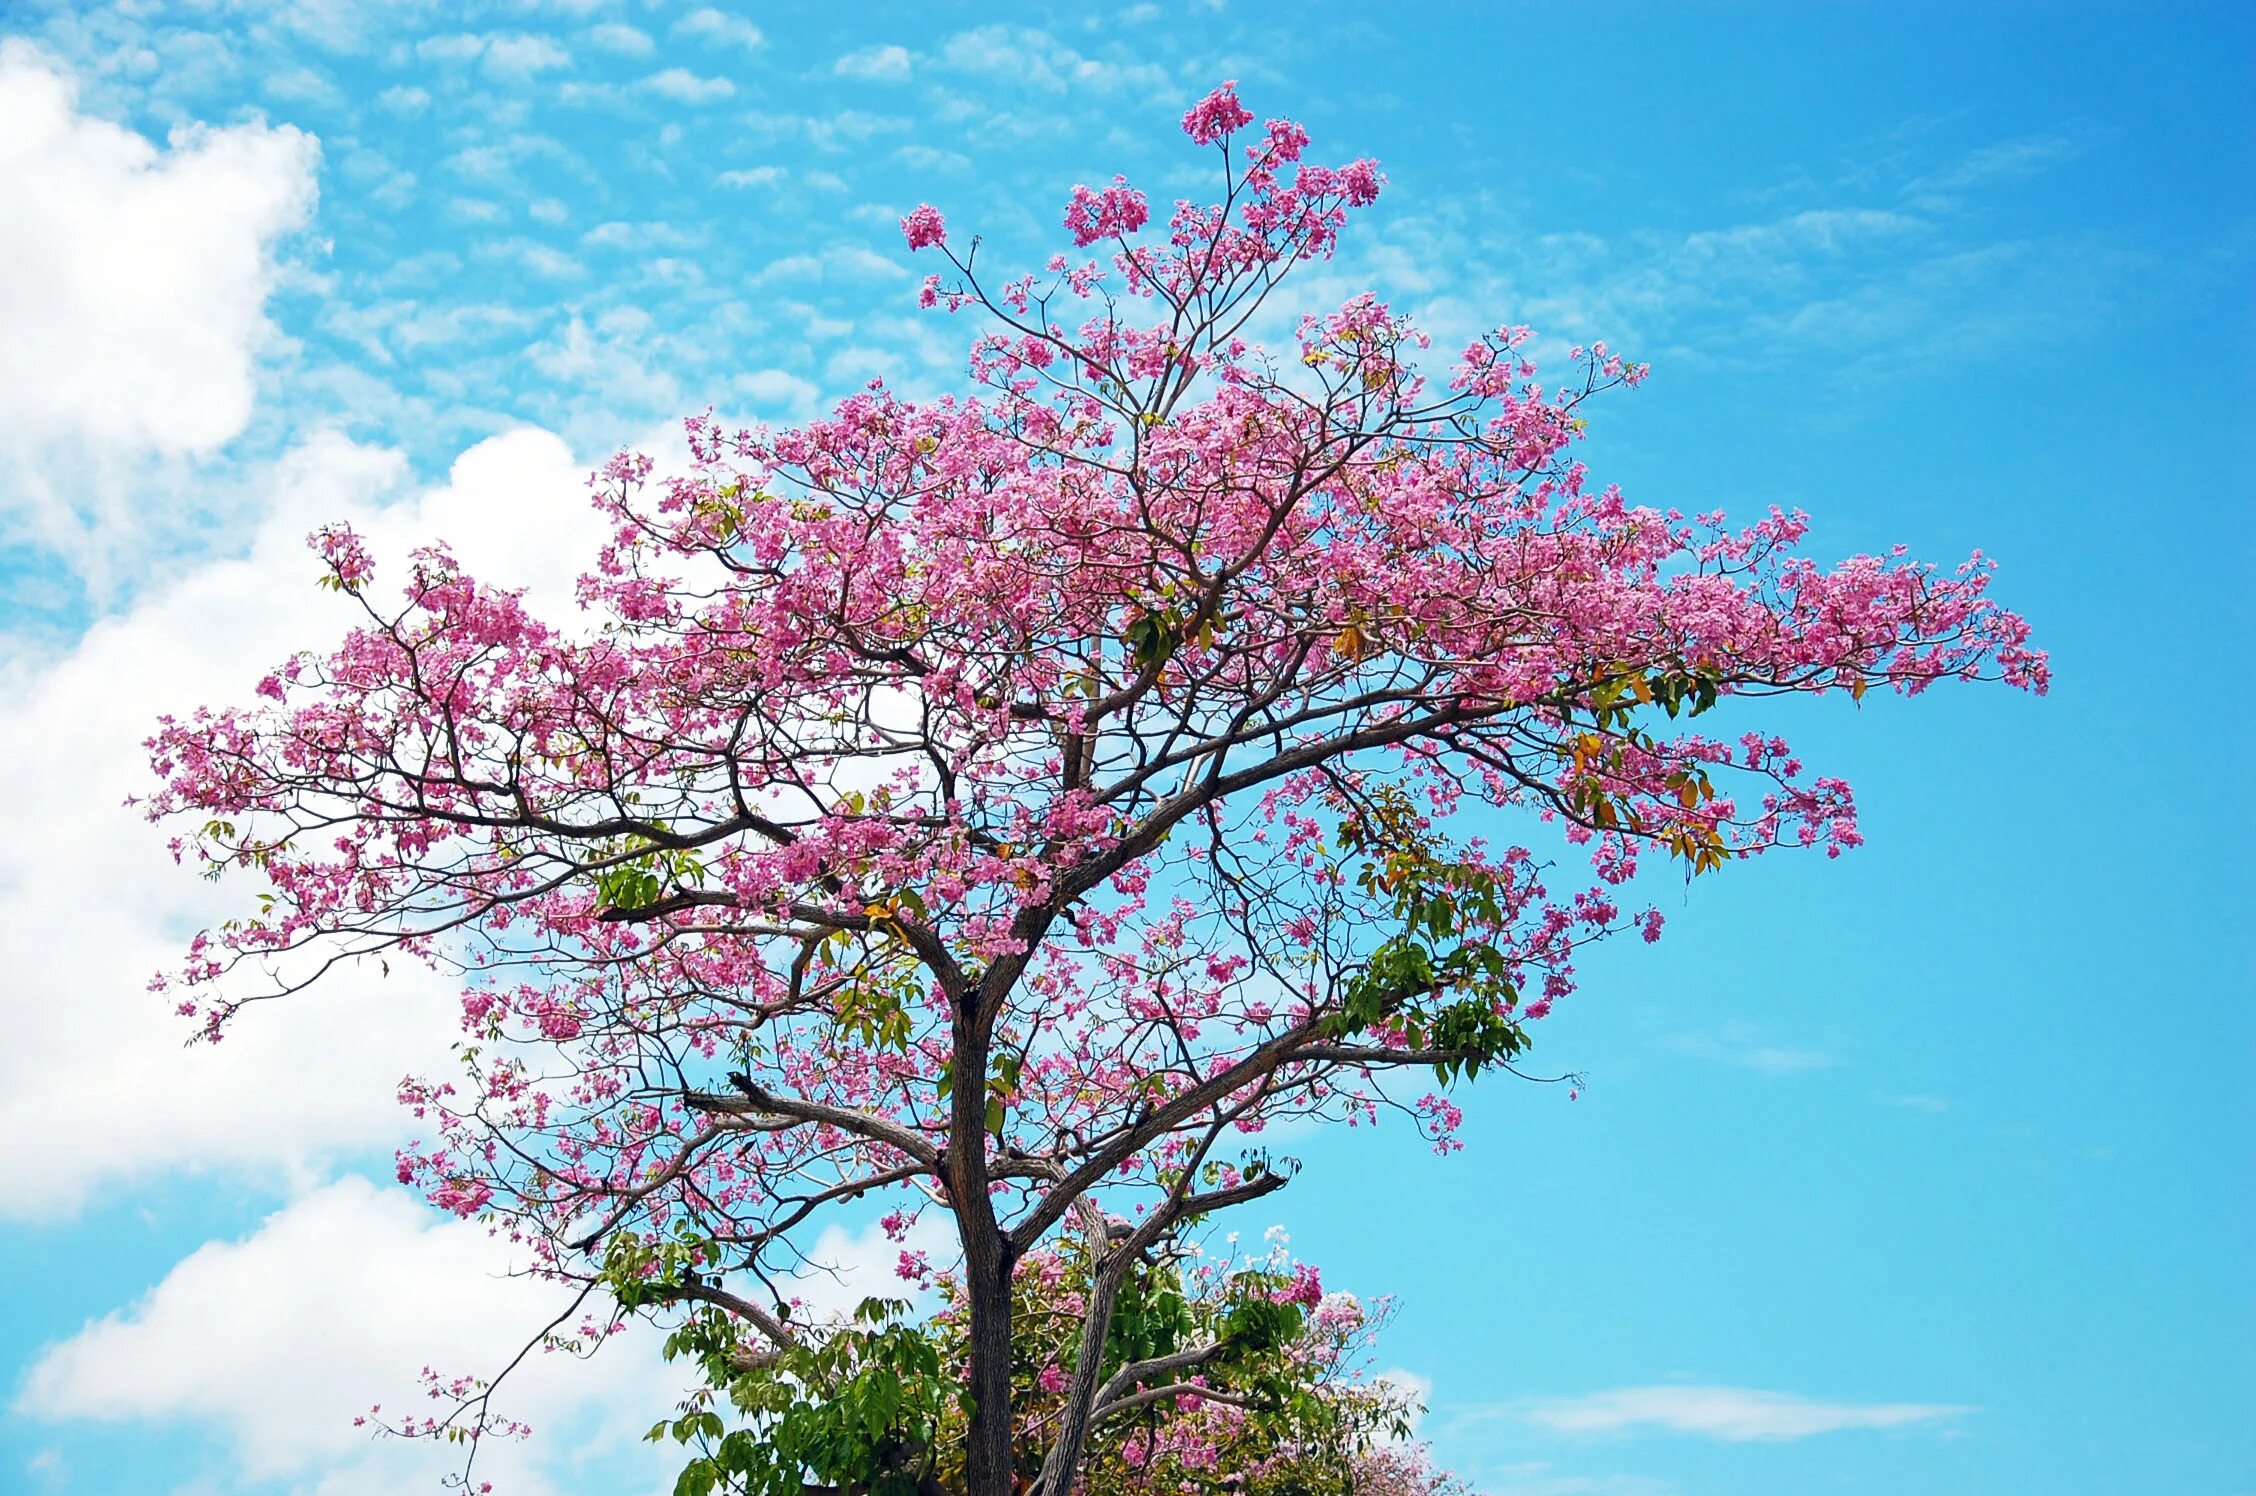 Черри блоссом дерево. Сакура черри блоссом дерево. Pink черри блоссом дерево деревья. Акация Сакура. Sakura blossom